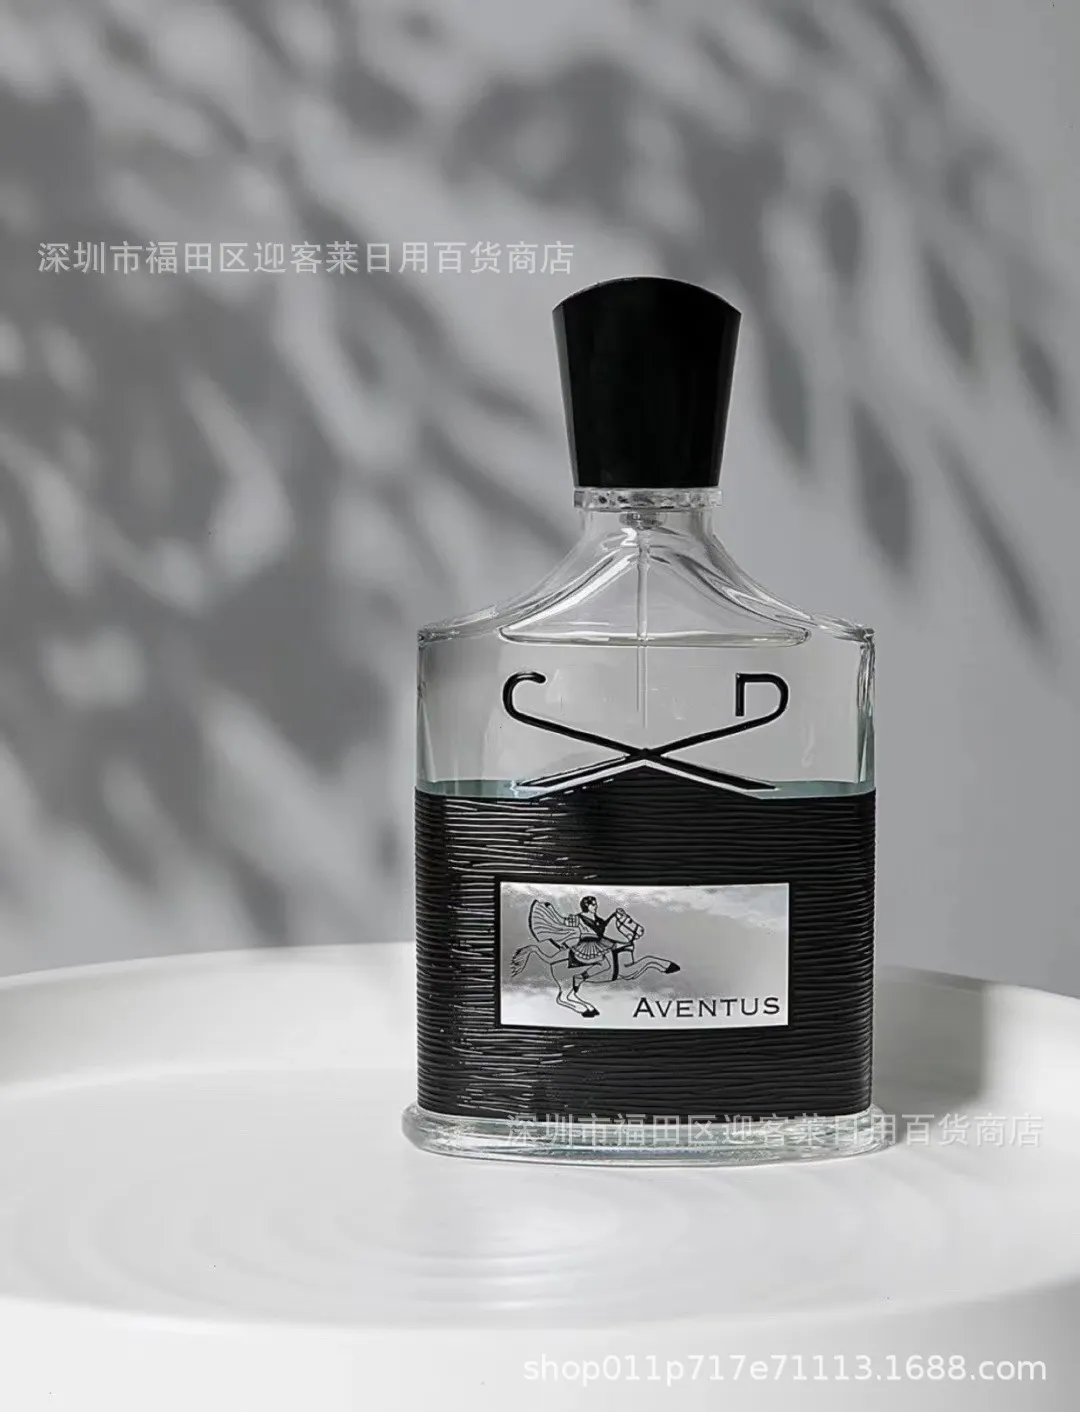 Solid Perfume Per 4Pieces Set For Men 120Ml Himalaya Imperial Mellisime Eau De Parfum Good Quality High Fragrance Capactity Cologne Bo Dhciu